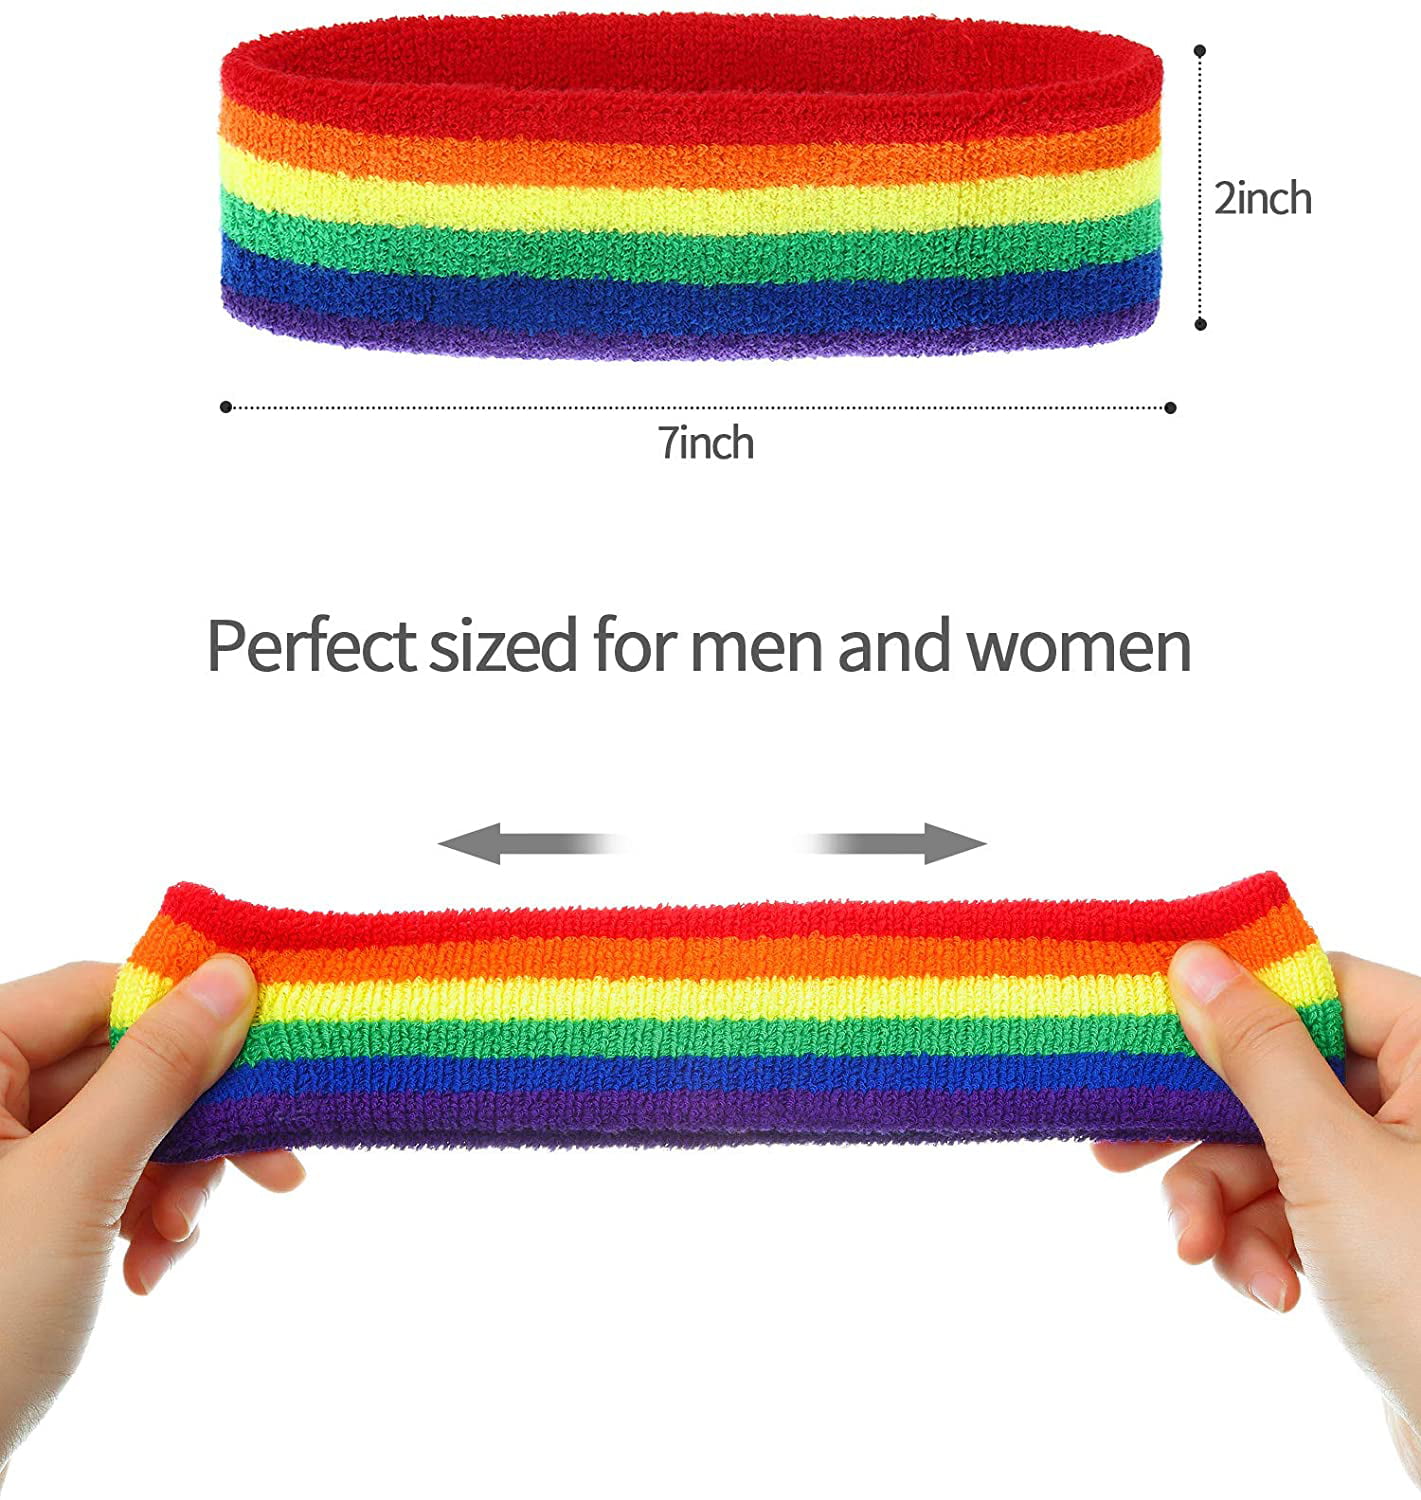 Rainbow Pride Cape Headband Sunglasses for Festivals Party Celebration and Daily Wear LGBTQ Gay Lesbian Pride Rainbow Set